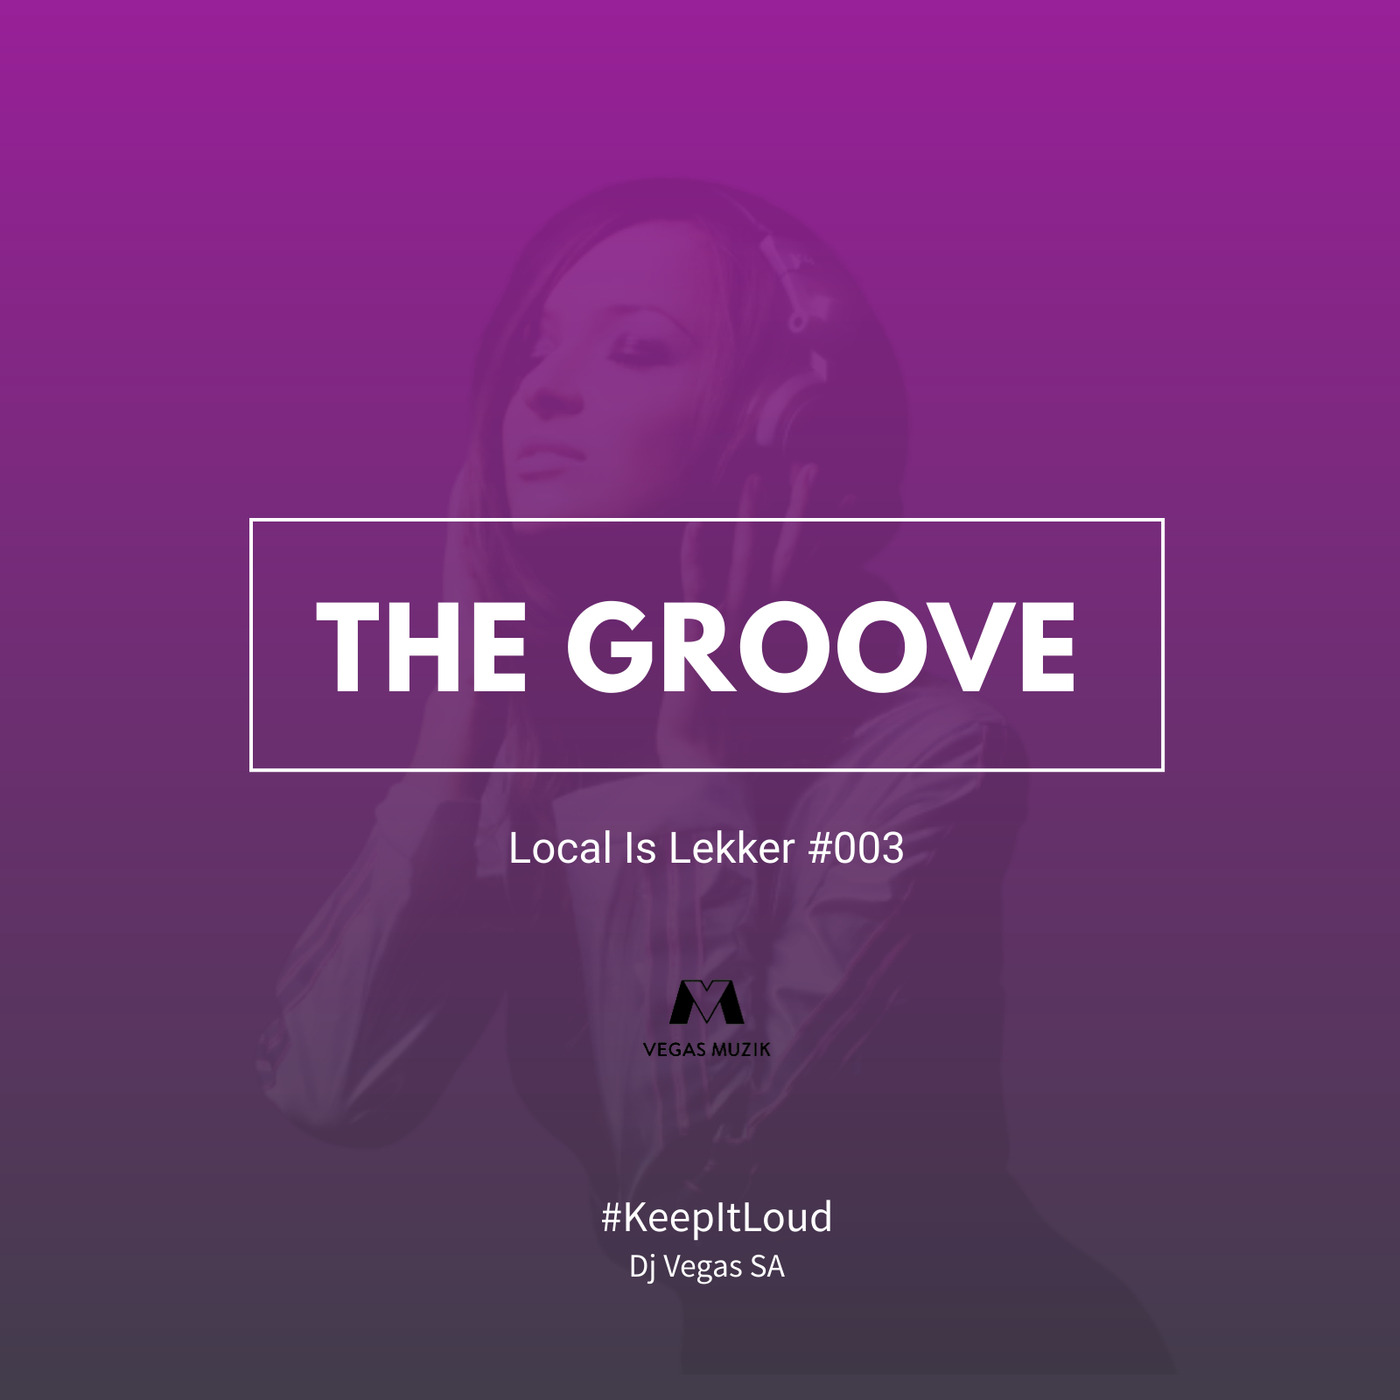 #KeepItLoud SHOW - THE GROOVE, Local Is Lekker #003